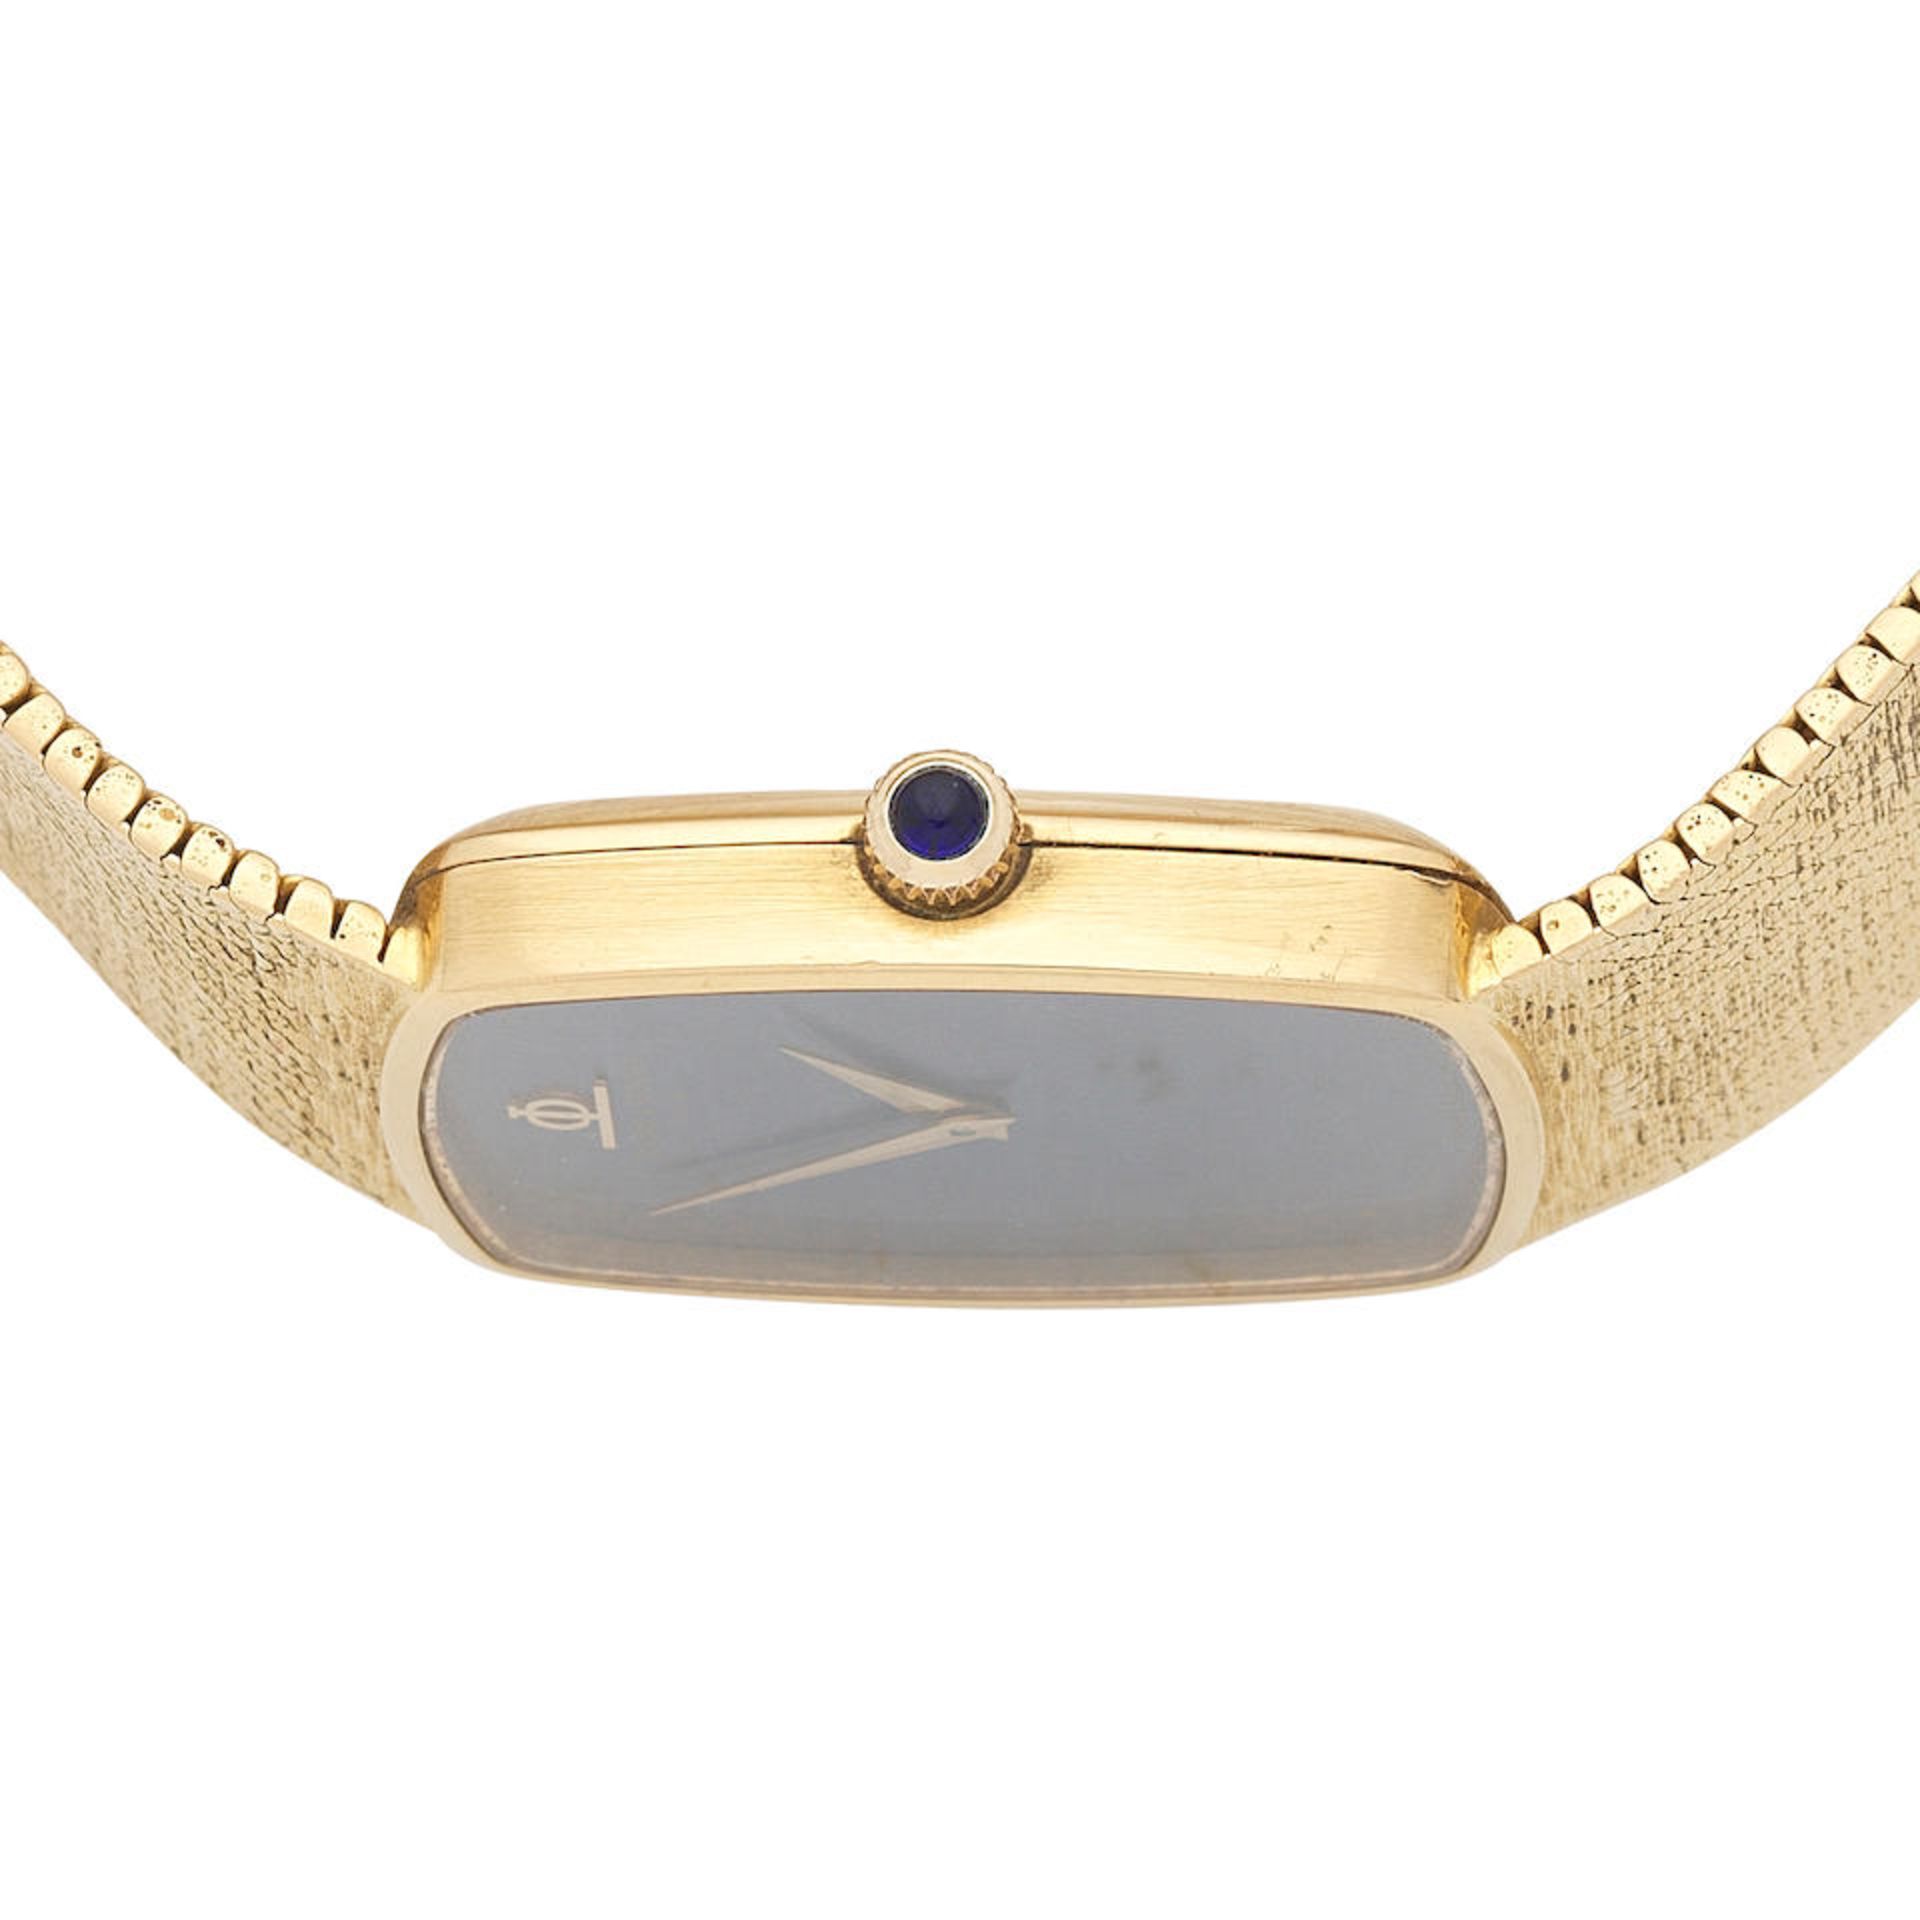 Baume & Mercier. An 18K gold manual wind bracelet watch Circa 1980 - Image 3 of 5